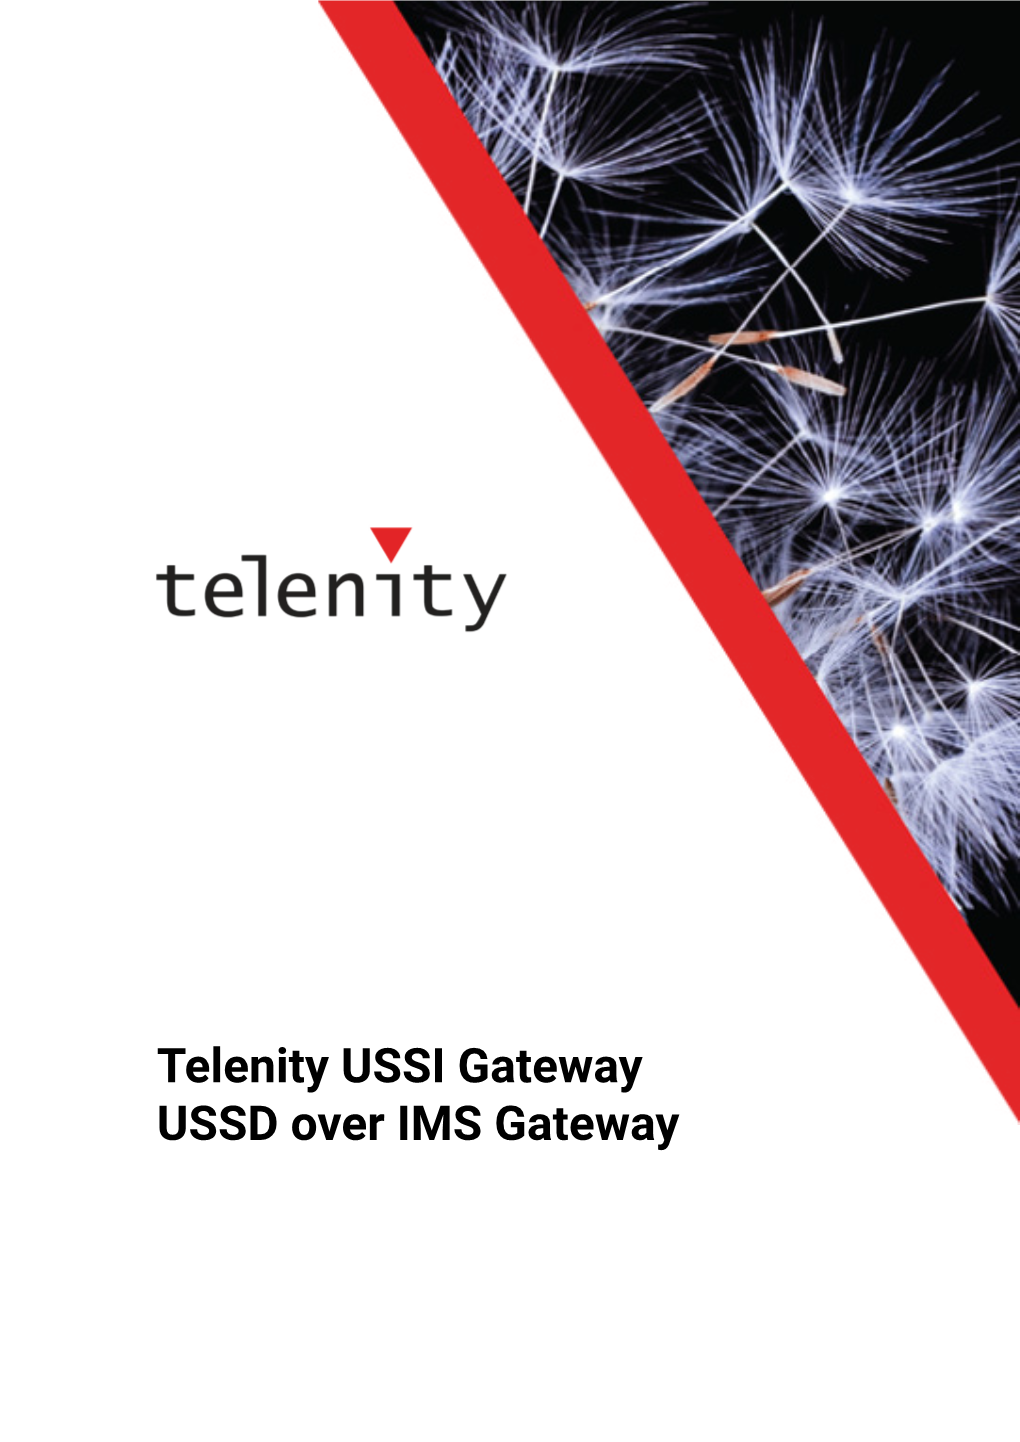 Telenity USSI Gateway USSD Over IMS Gateway